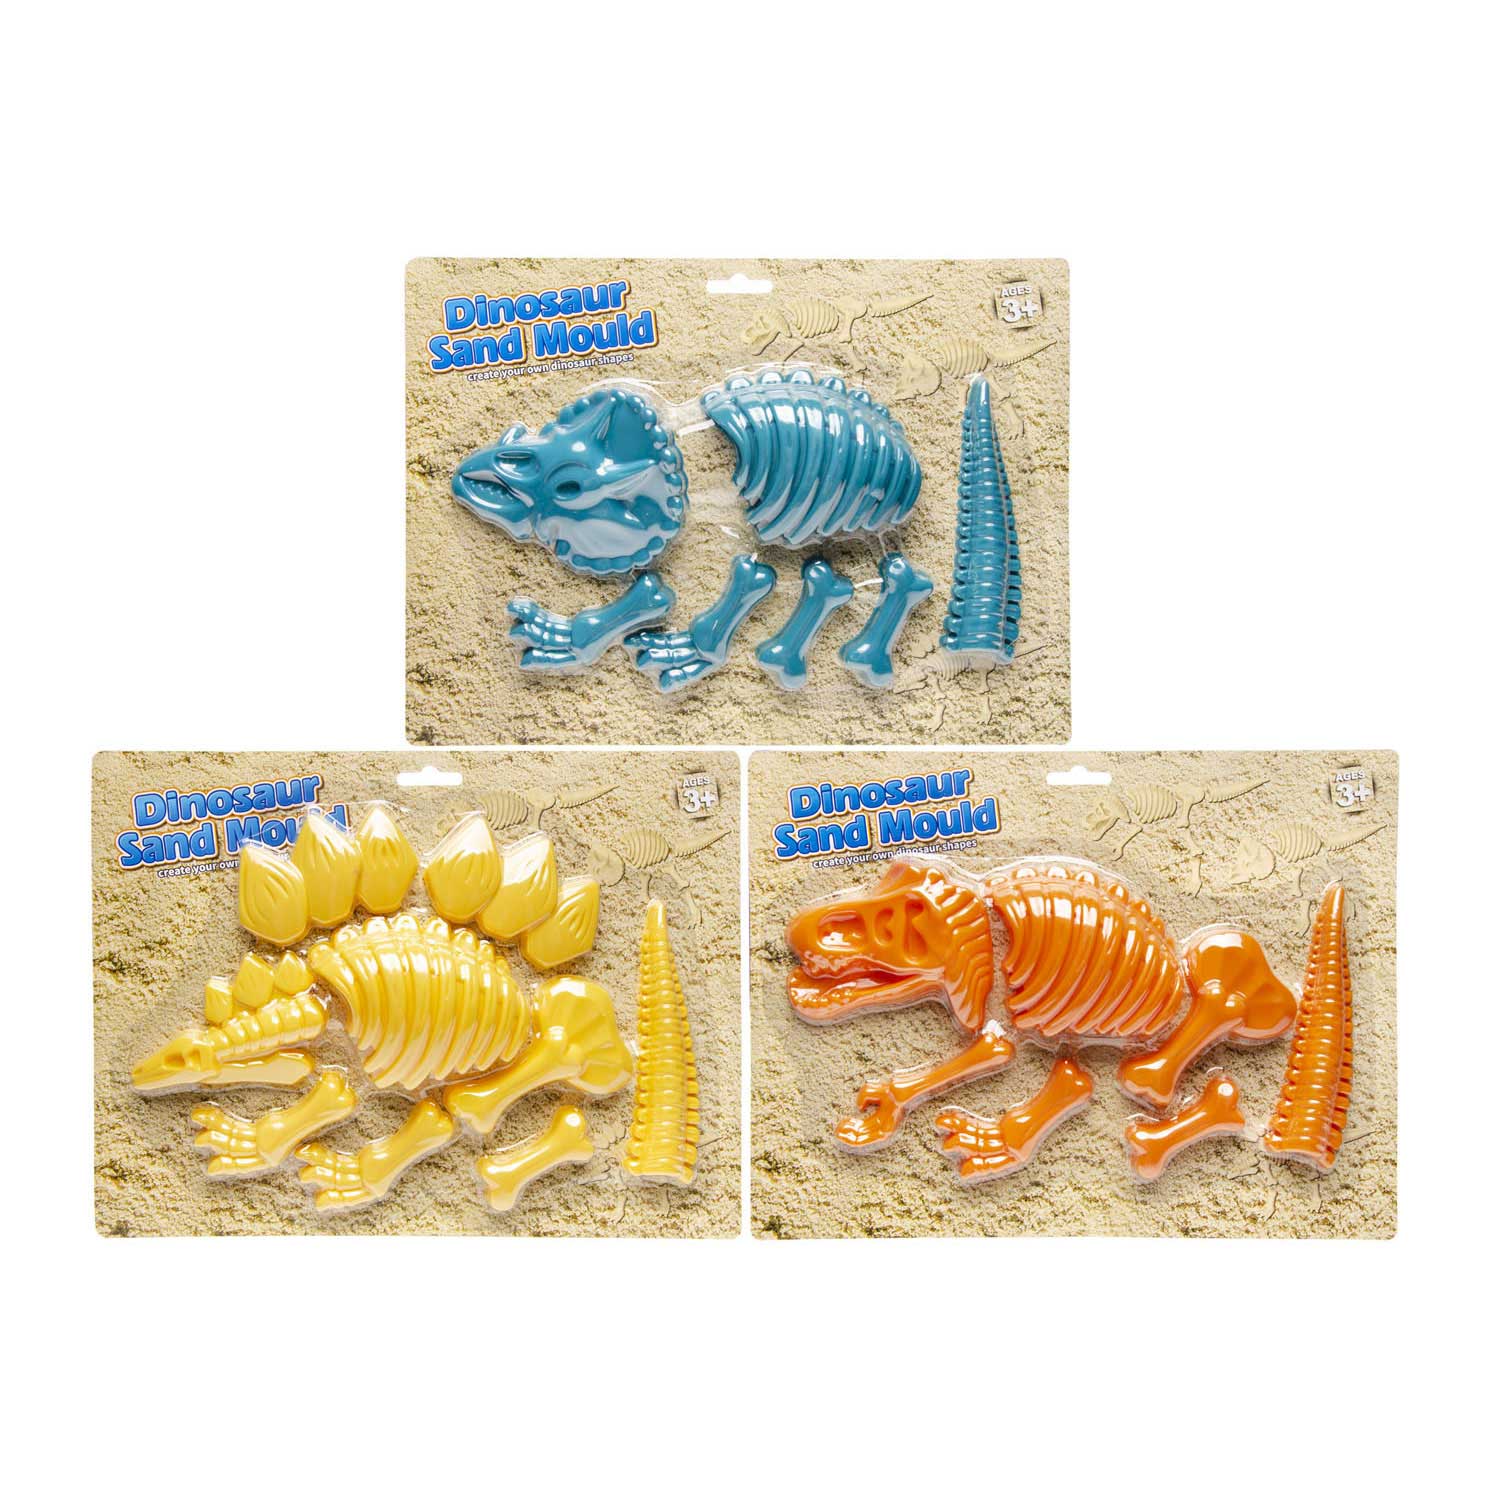 Kinder Sandformen Dinosaurier Sand Form Sandkasten Strandspielzeug 